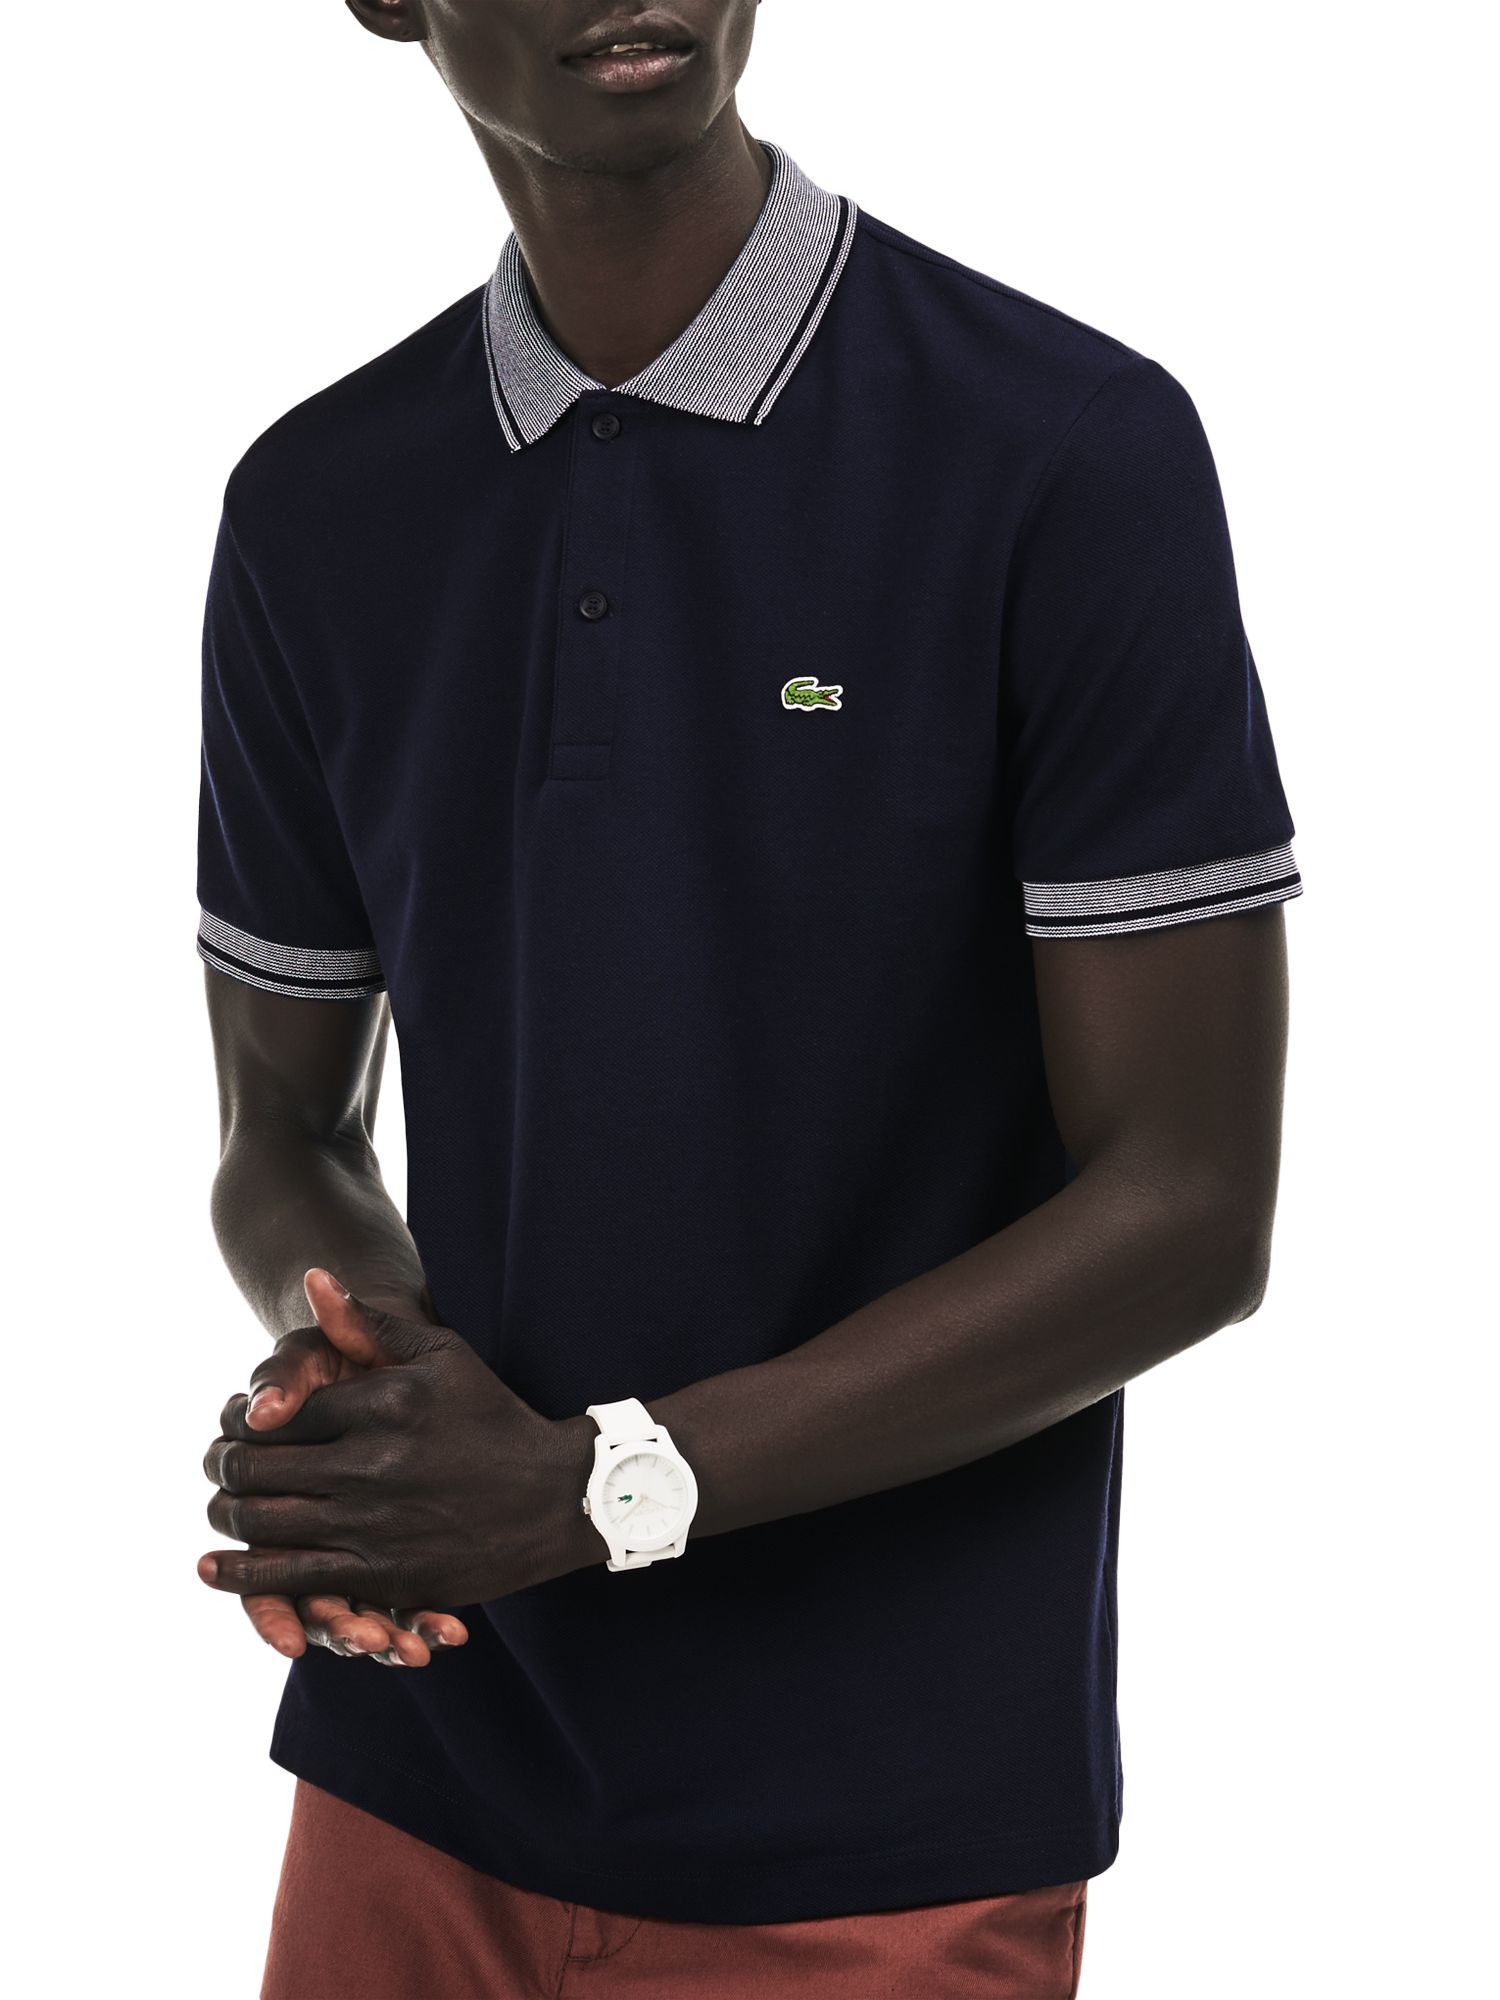 Lacoste Regular Fit Woven Collar Short Sleeve Polo Shirt, Navy/White, XXL